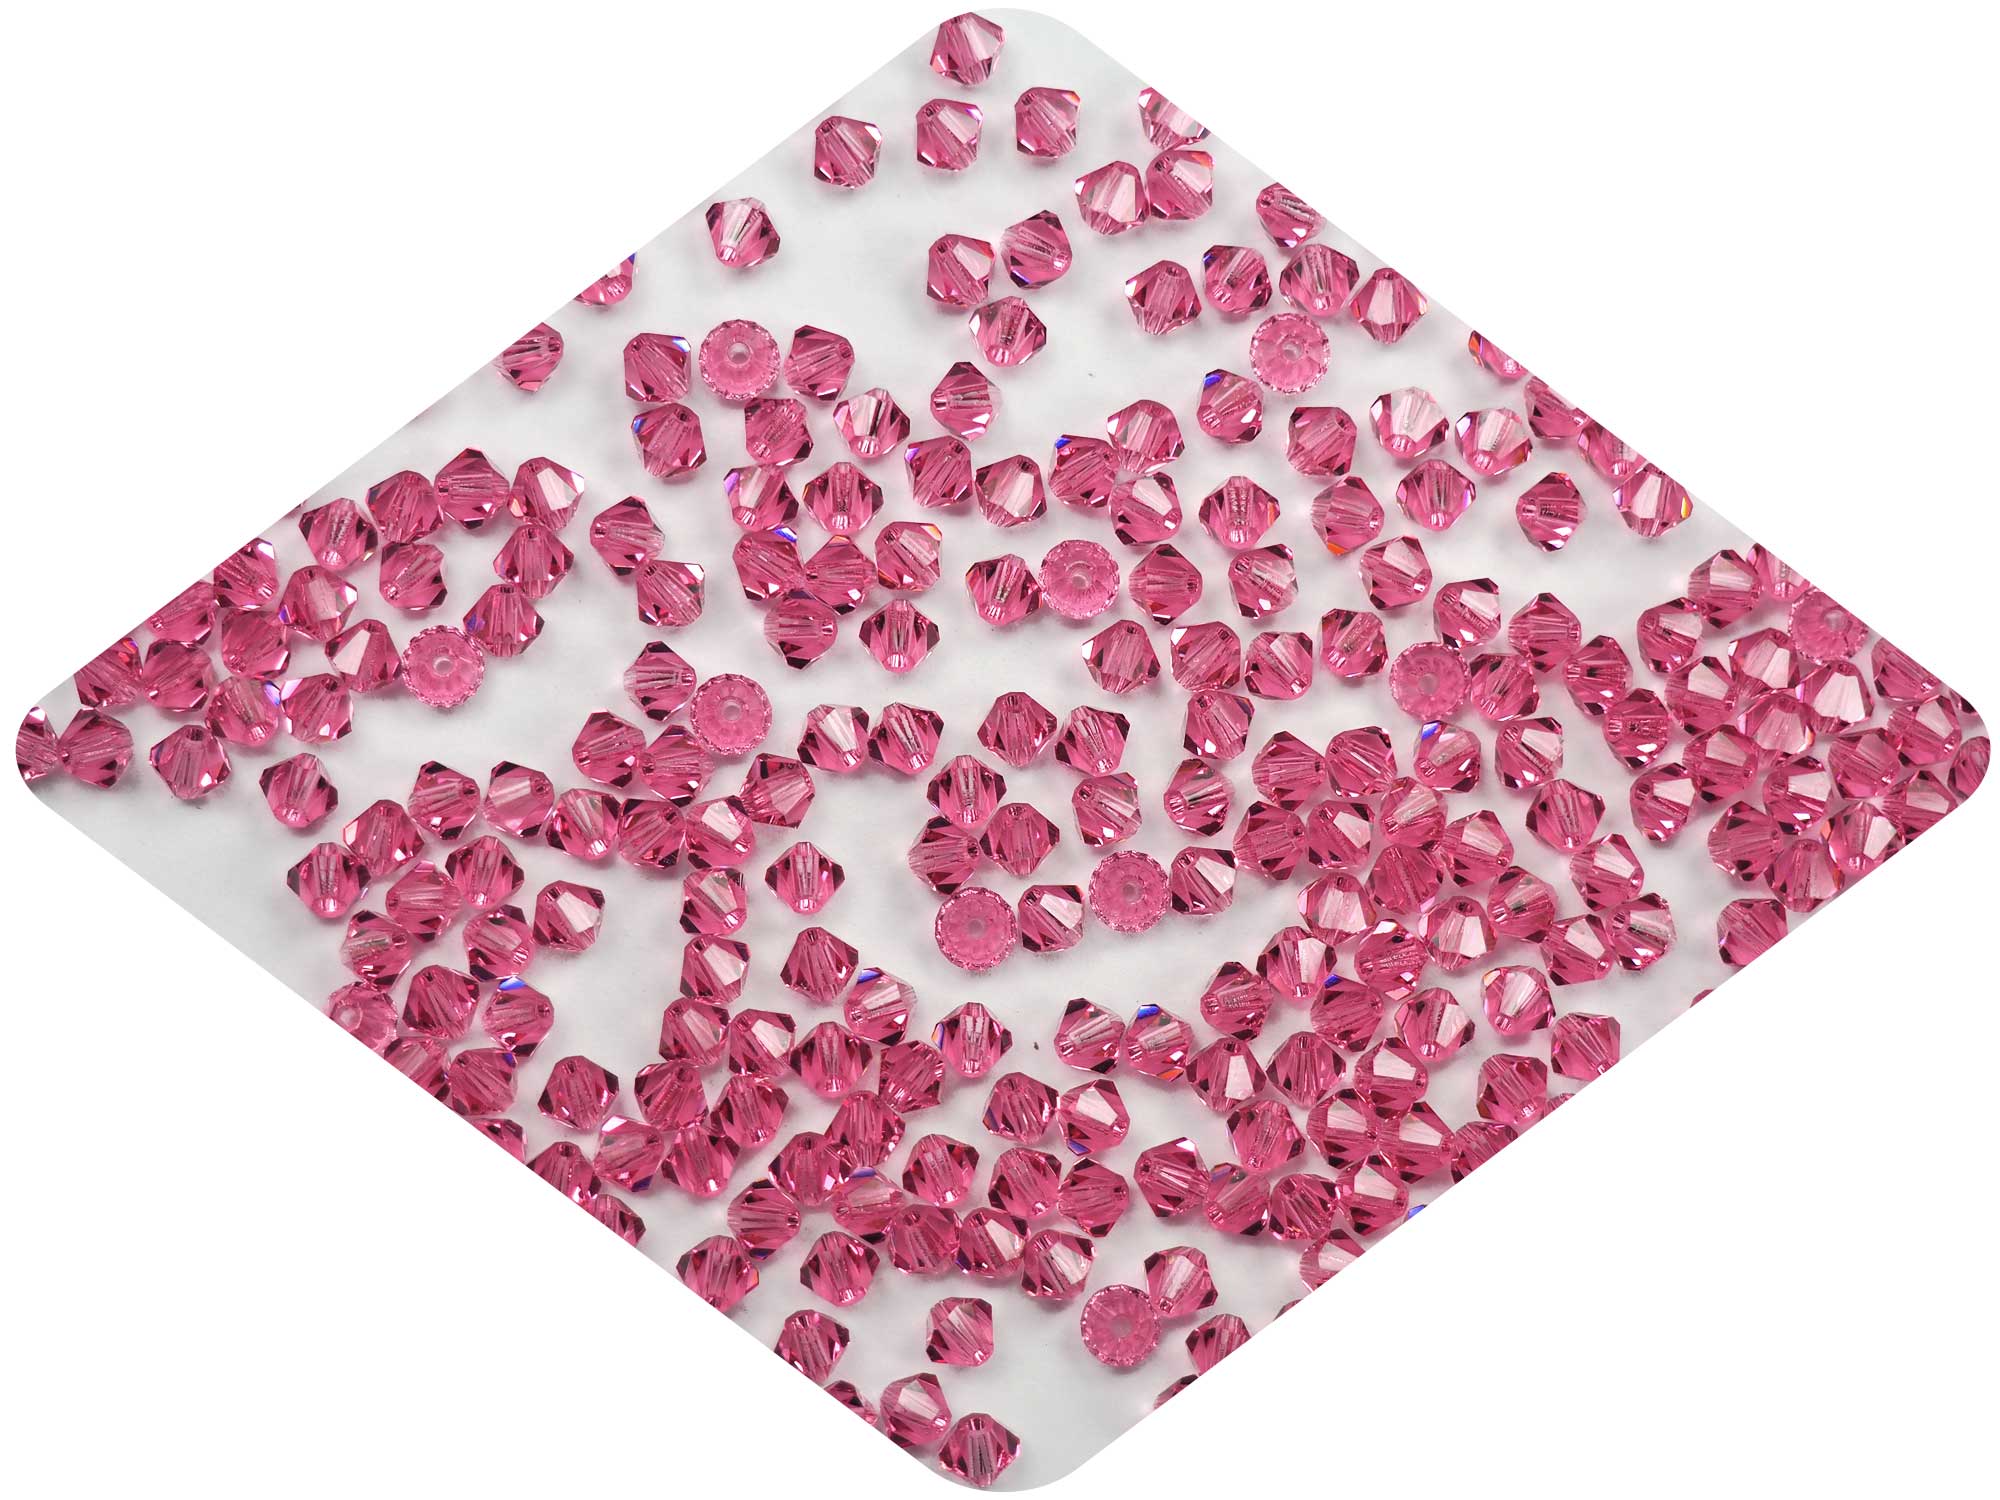 Rose (Preciosa color), Czech Glass Beads, Machine Cut Bicones (MC Rondell, Diamond Shape), dark pink crystals